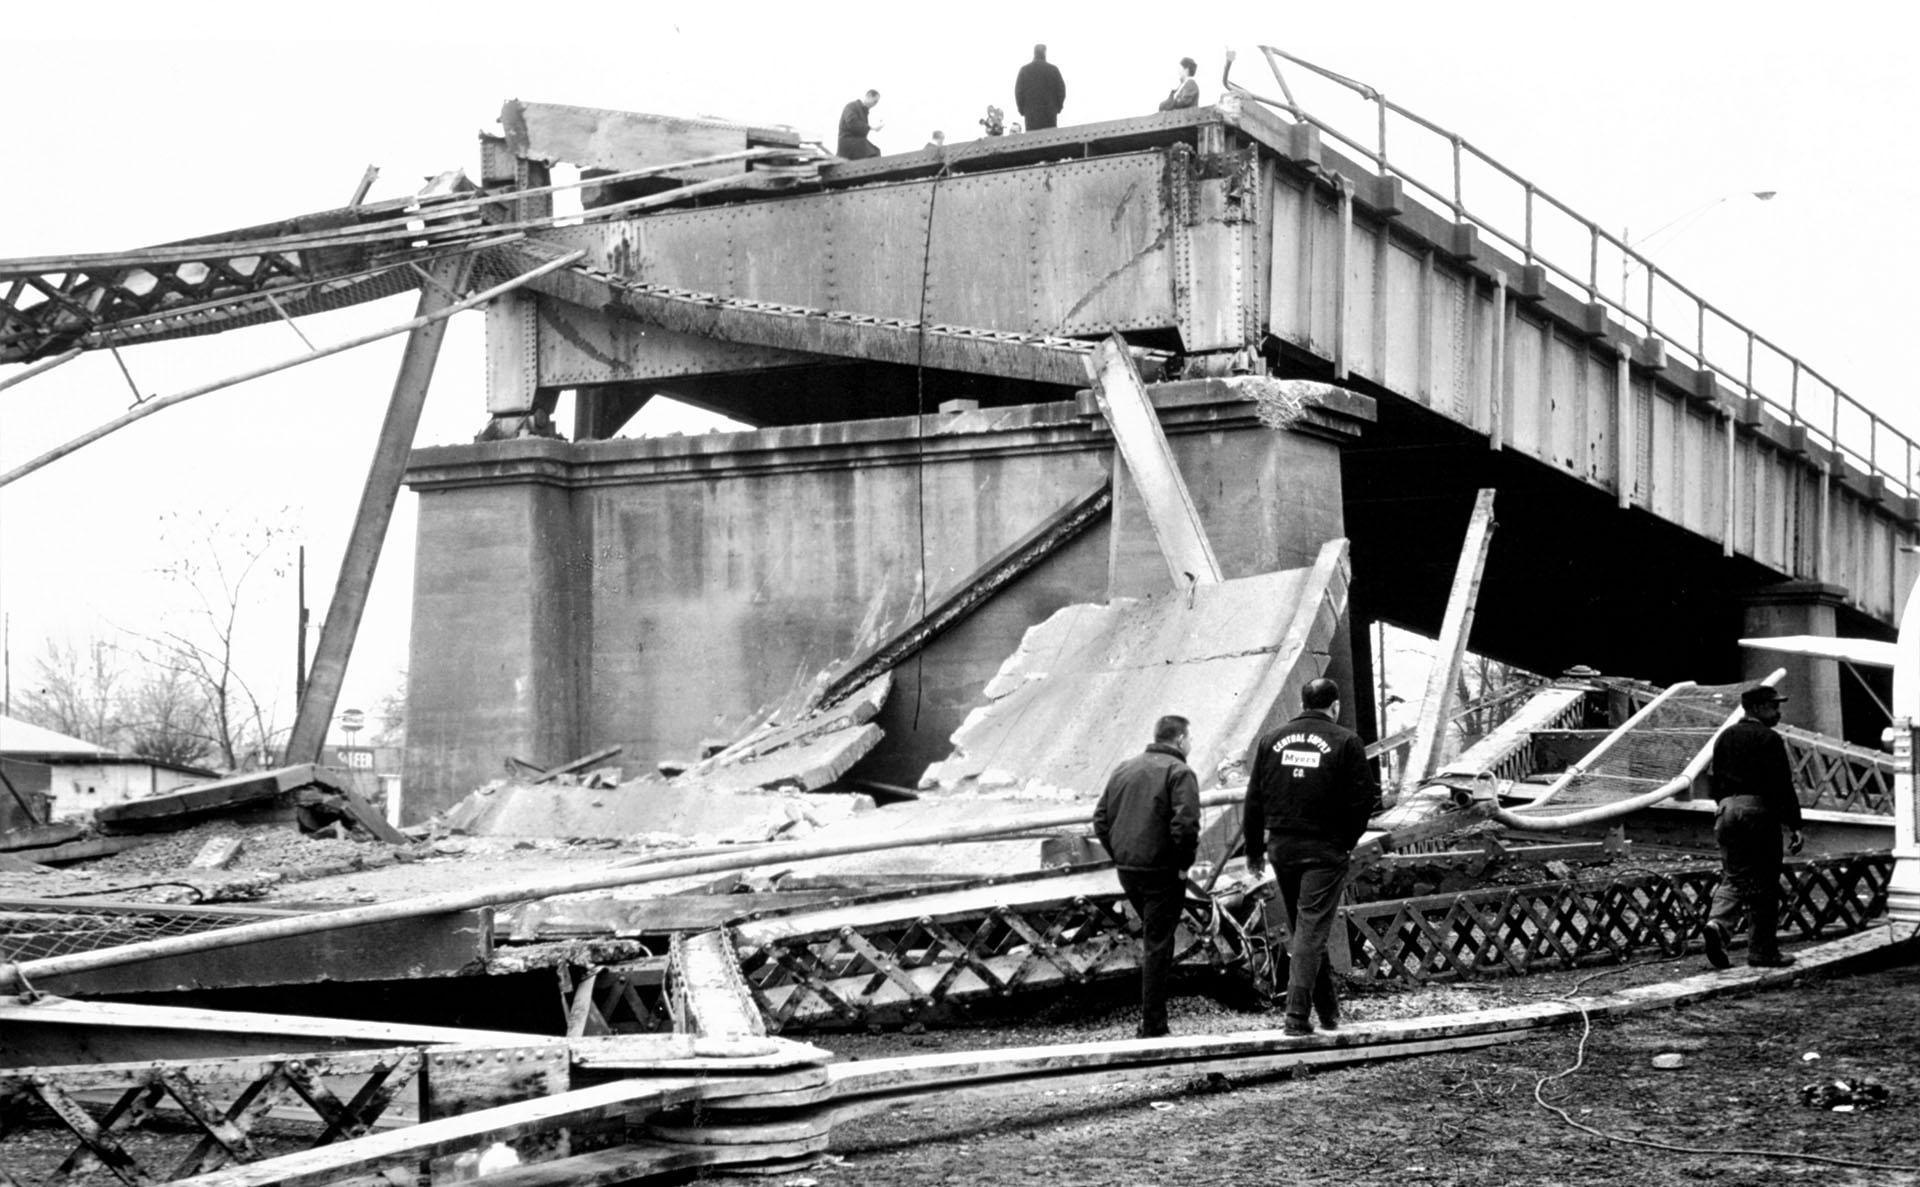 Photograph of the Silver Bridge collapse.